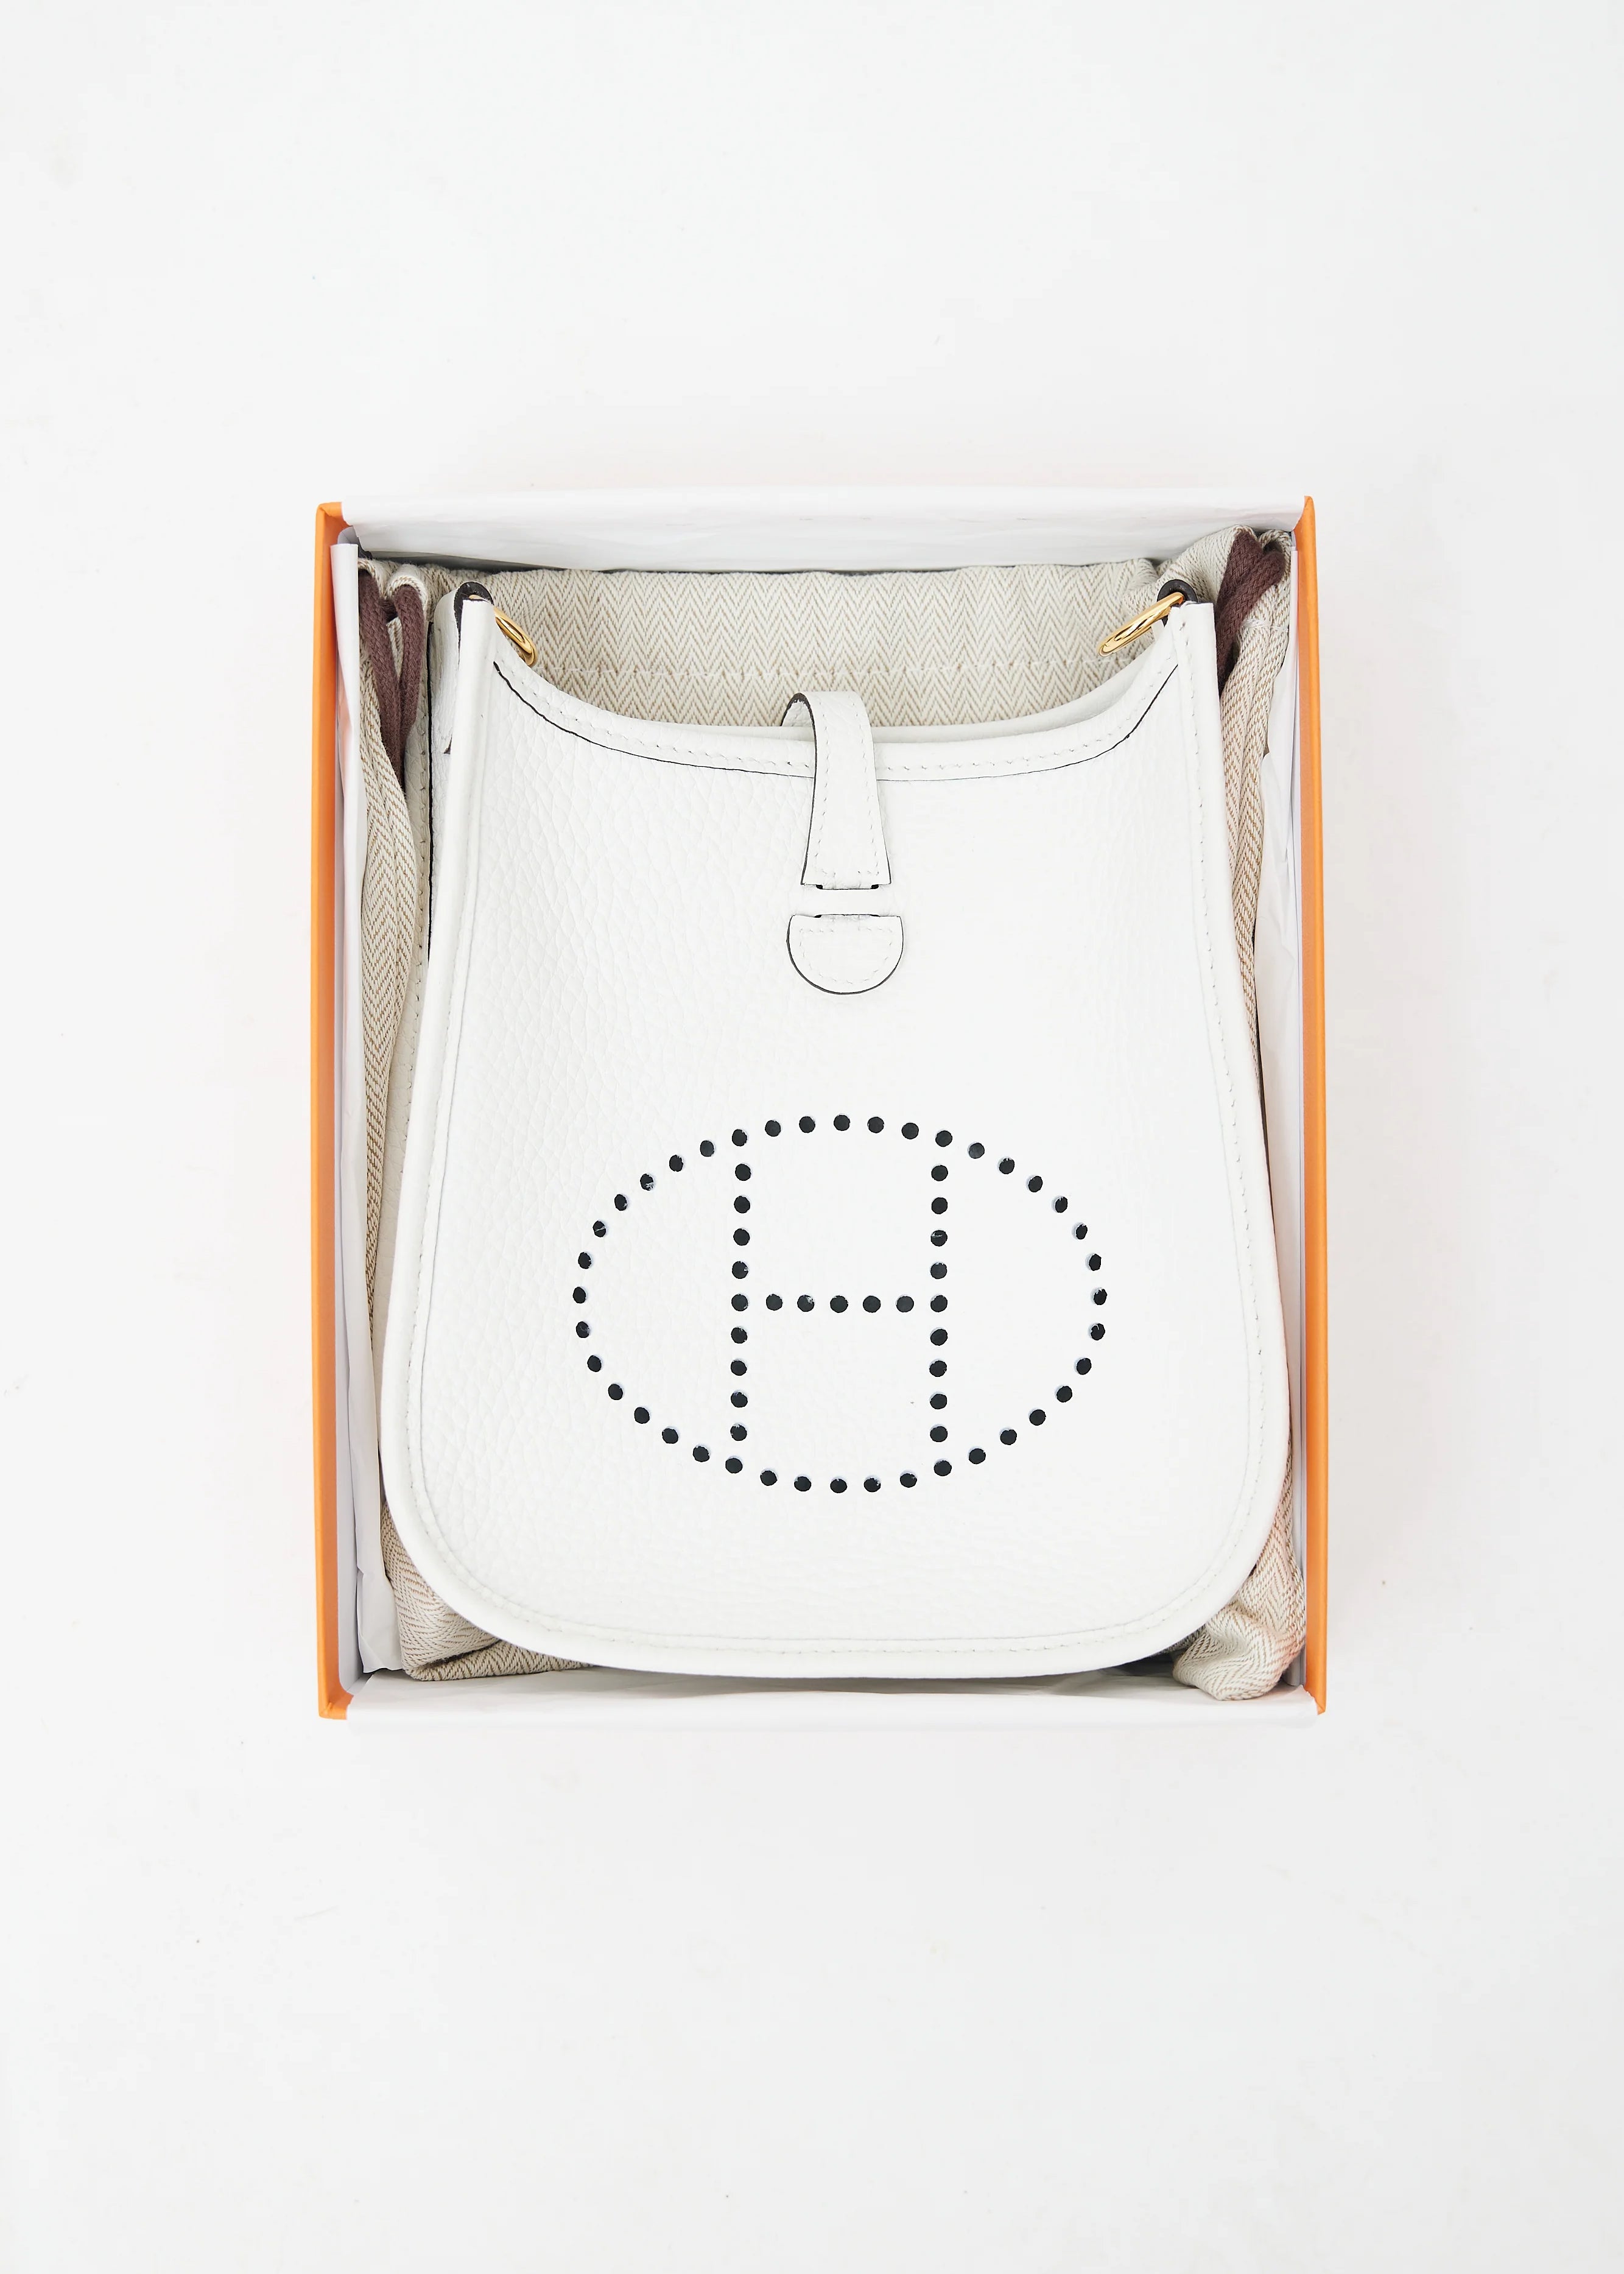 Hermes Bag Handbag Multi Beige, Green, Orange, Brown Fabric And Leather  Auction